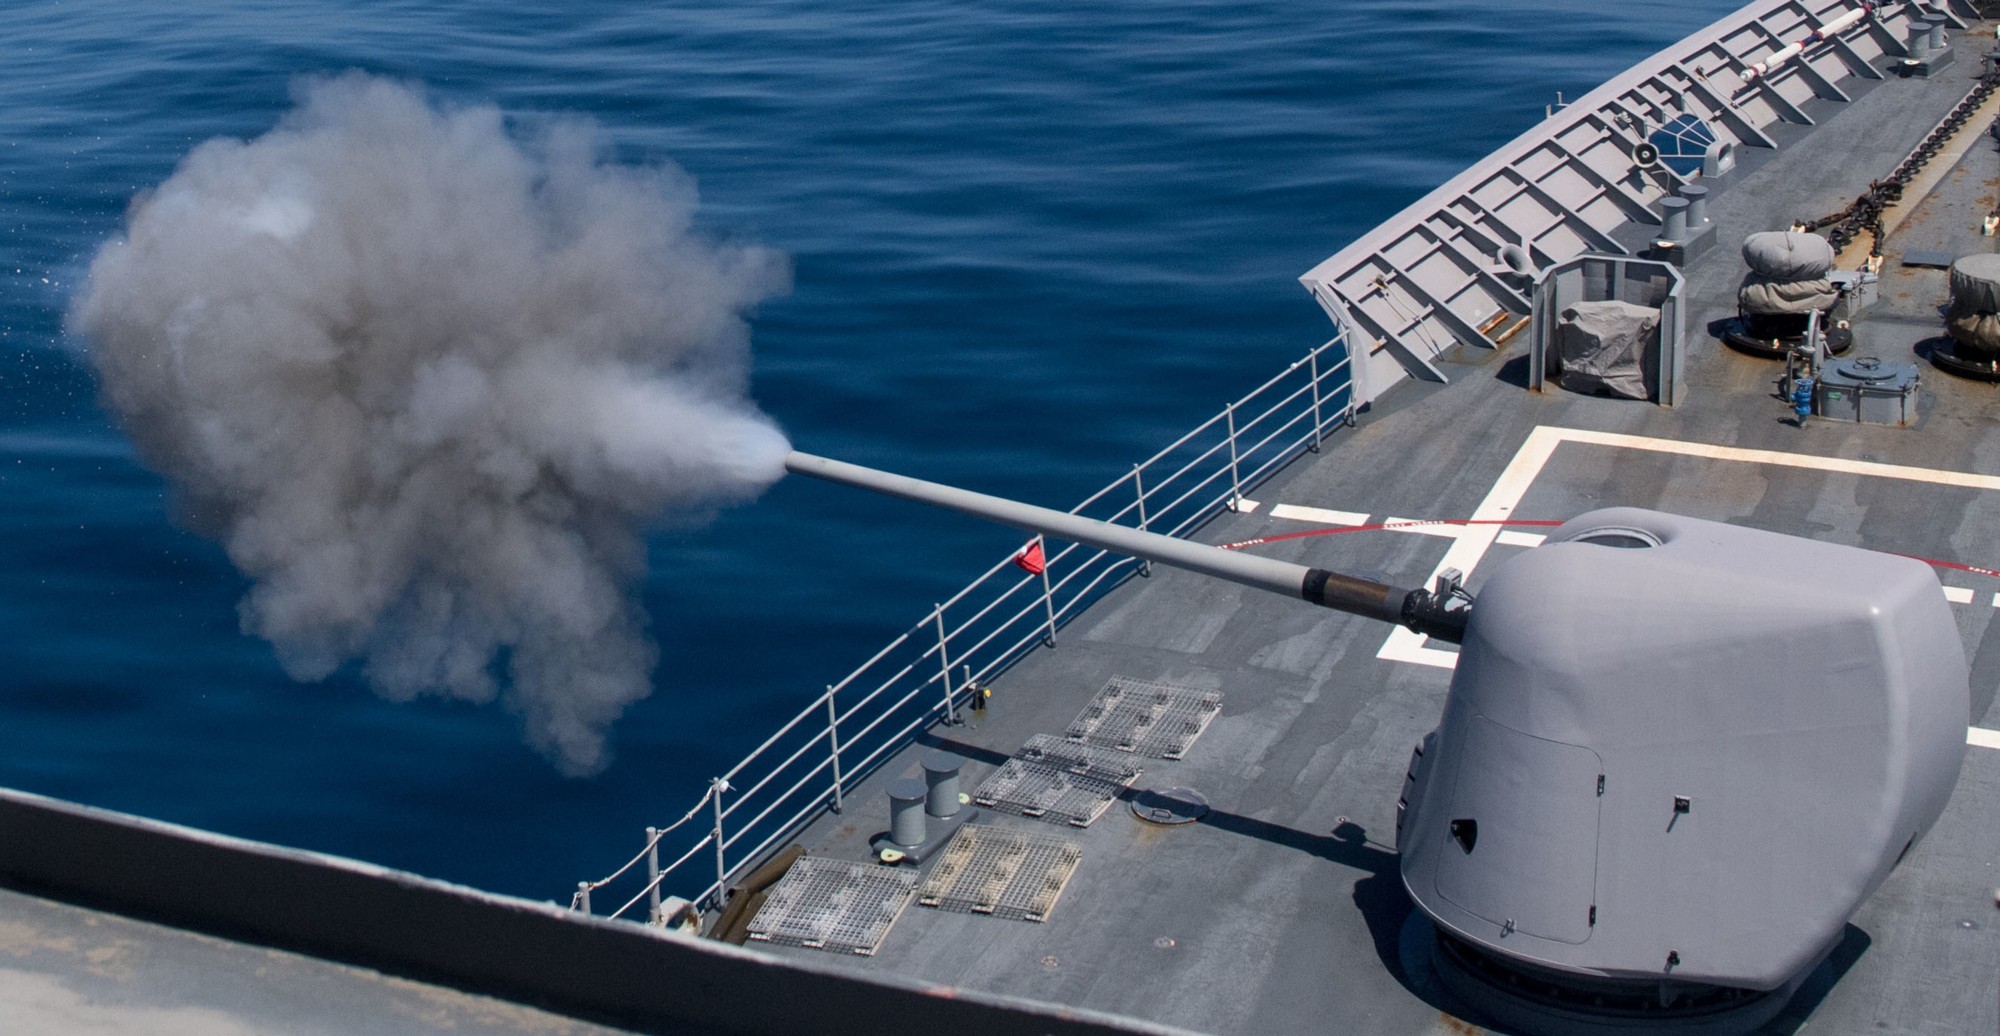 cg-59 uss princeton ticonderoga class guided missile cruiser aegis us navy mk.45 mod.2 gun fire 69